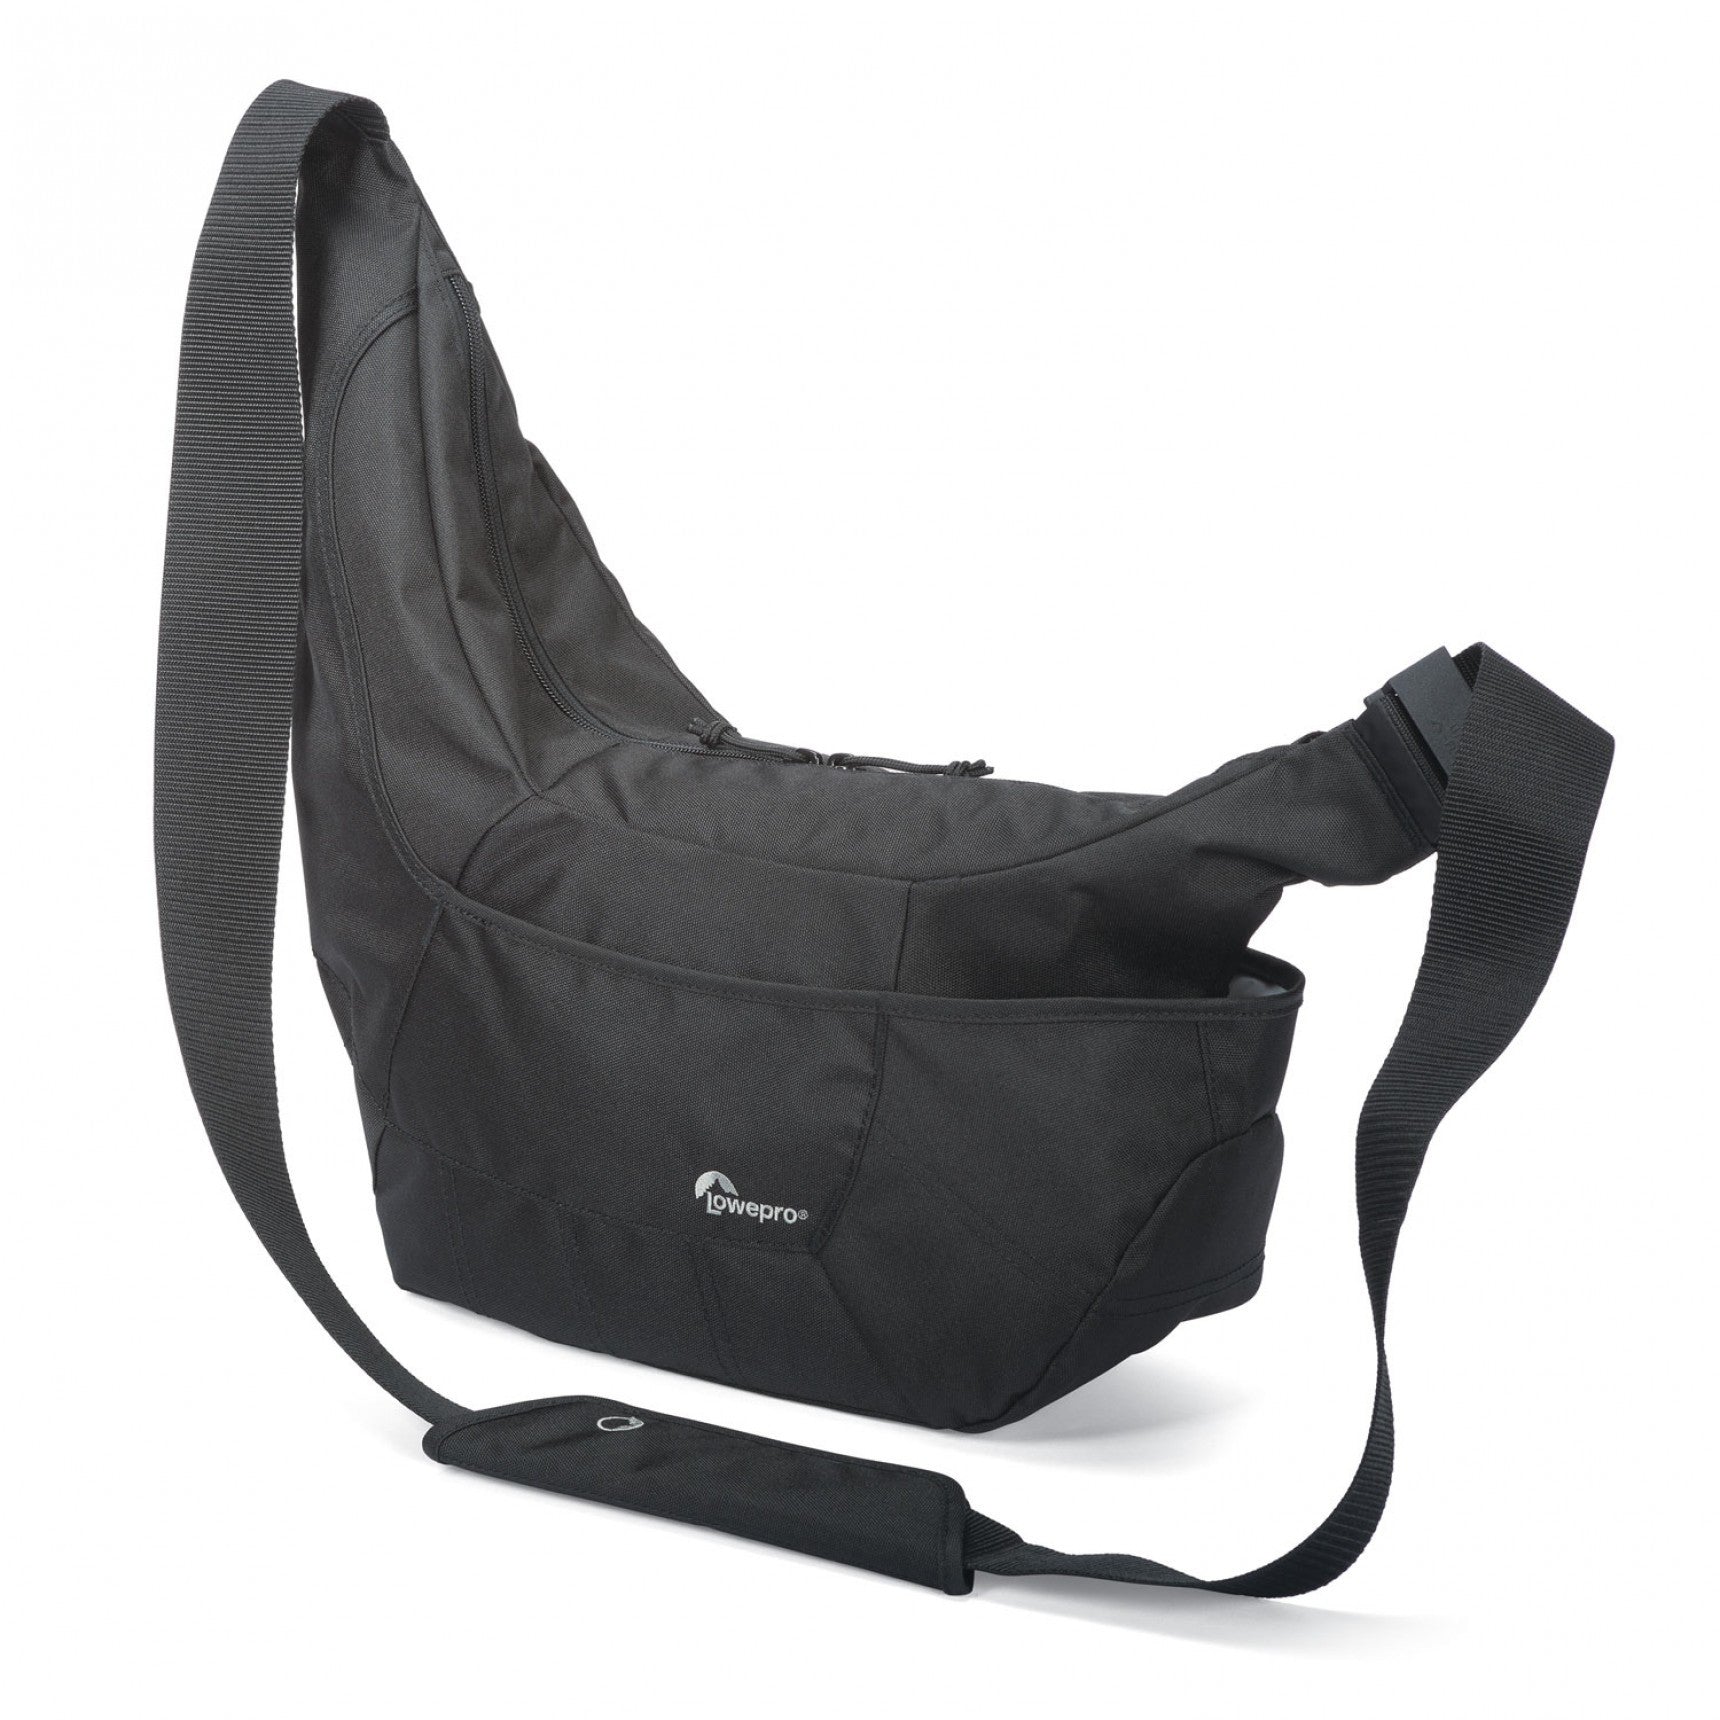 Lowepro Passport Sling III (Black), bags sling / daypacks, LowePro - Pictureline  - 1